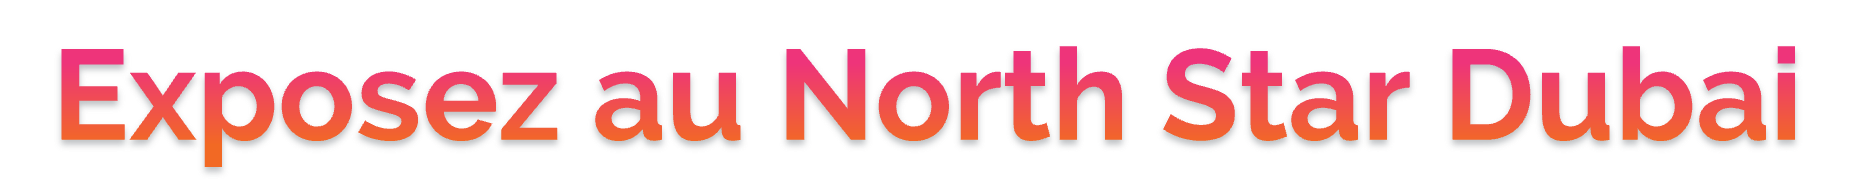 north-star-dubai